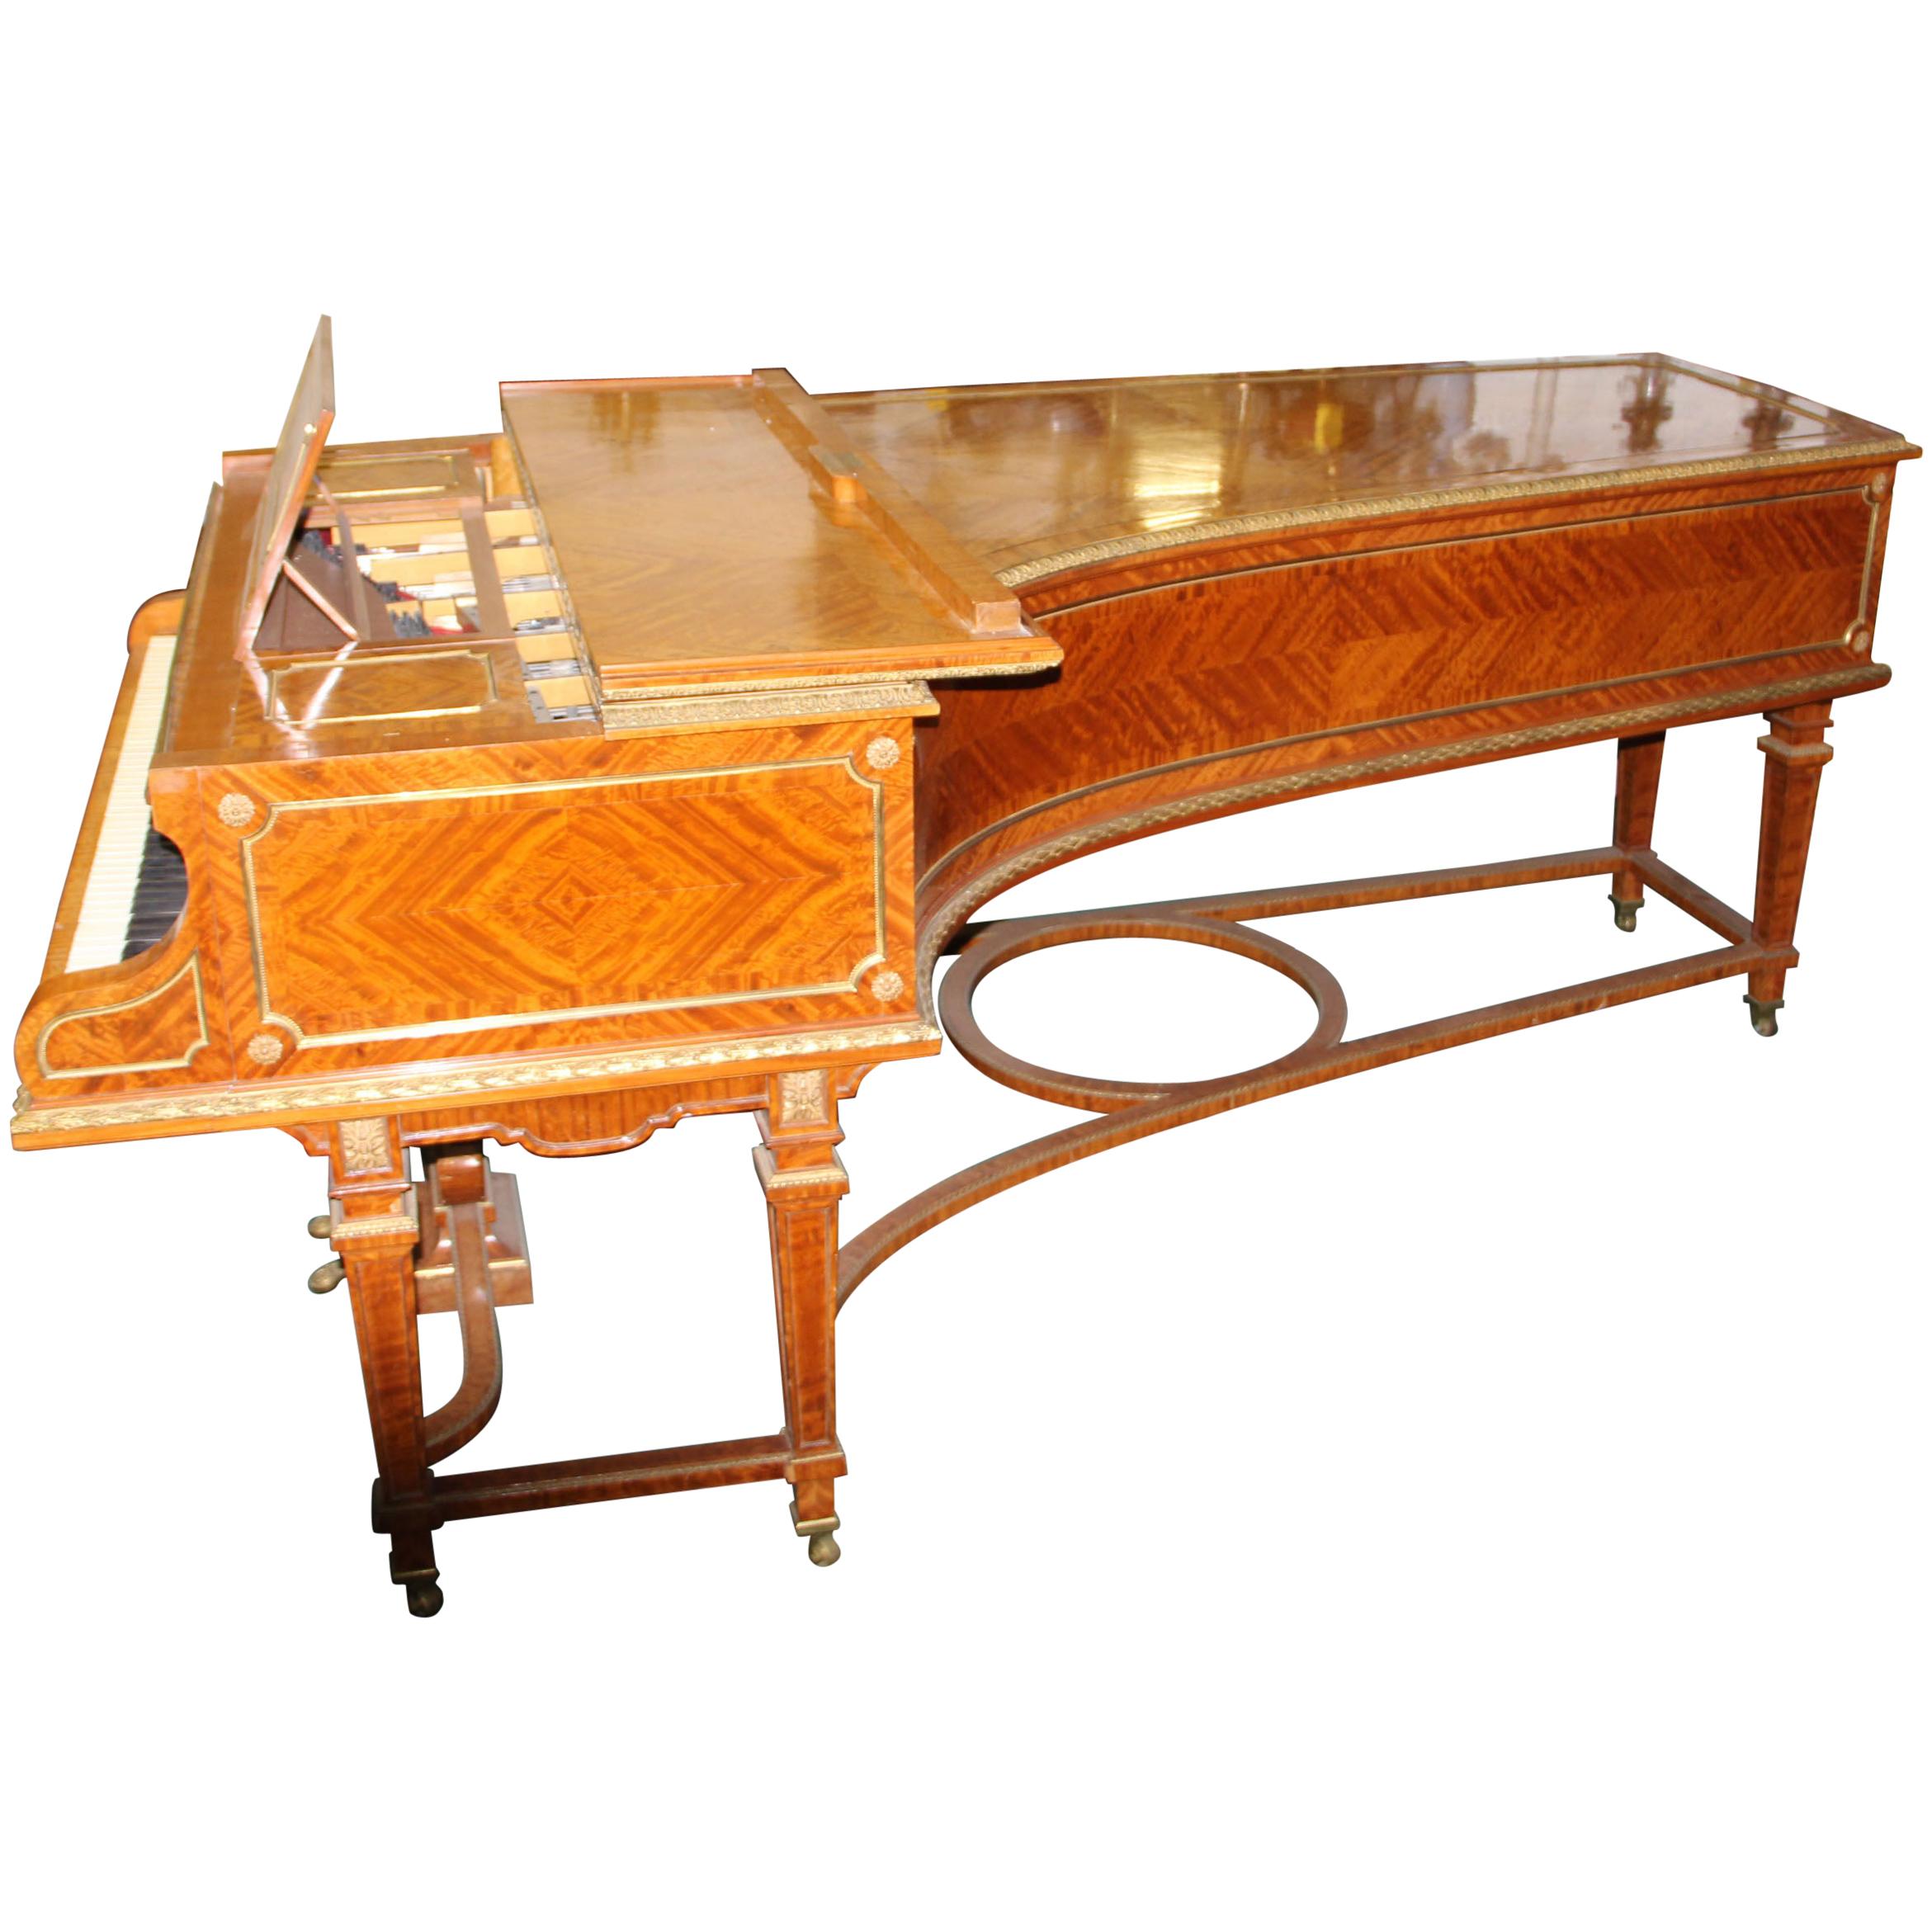 Wonderful Turn of the Century Gilt Bronze Mounted Six-Leg Grand Erard Piano